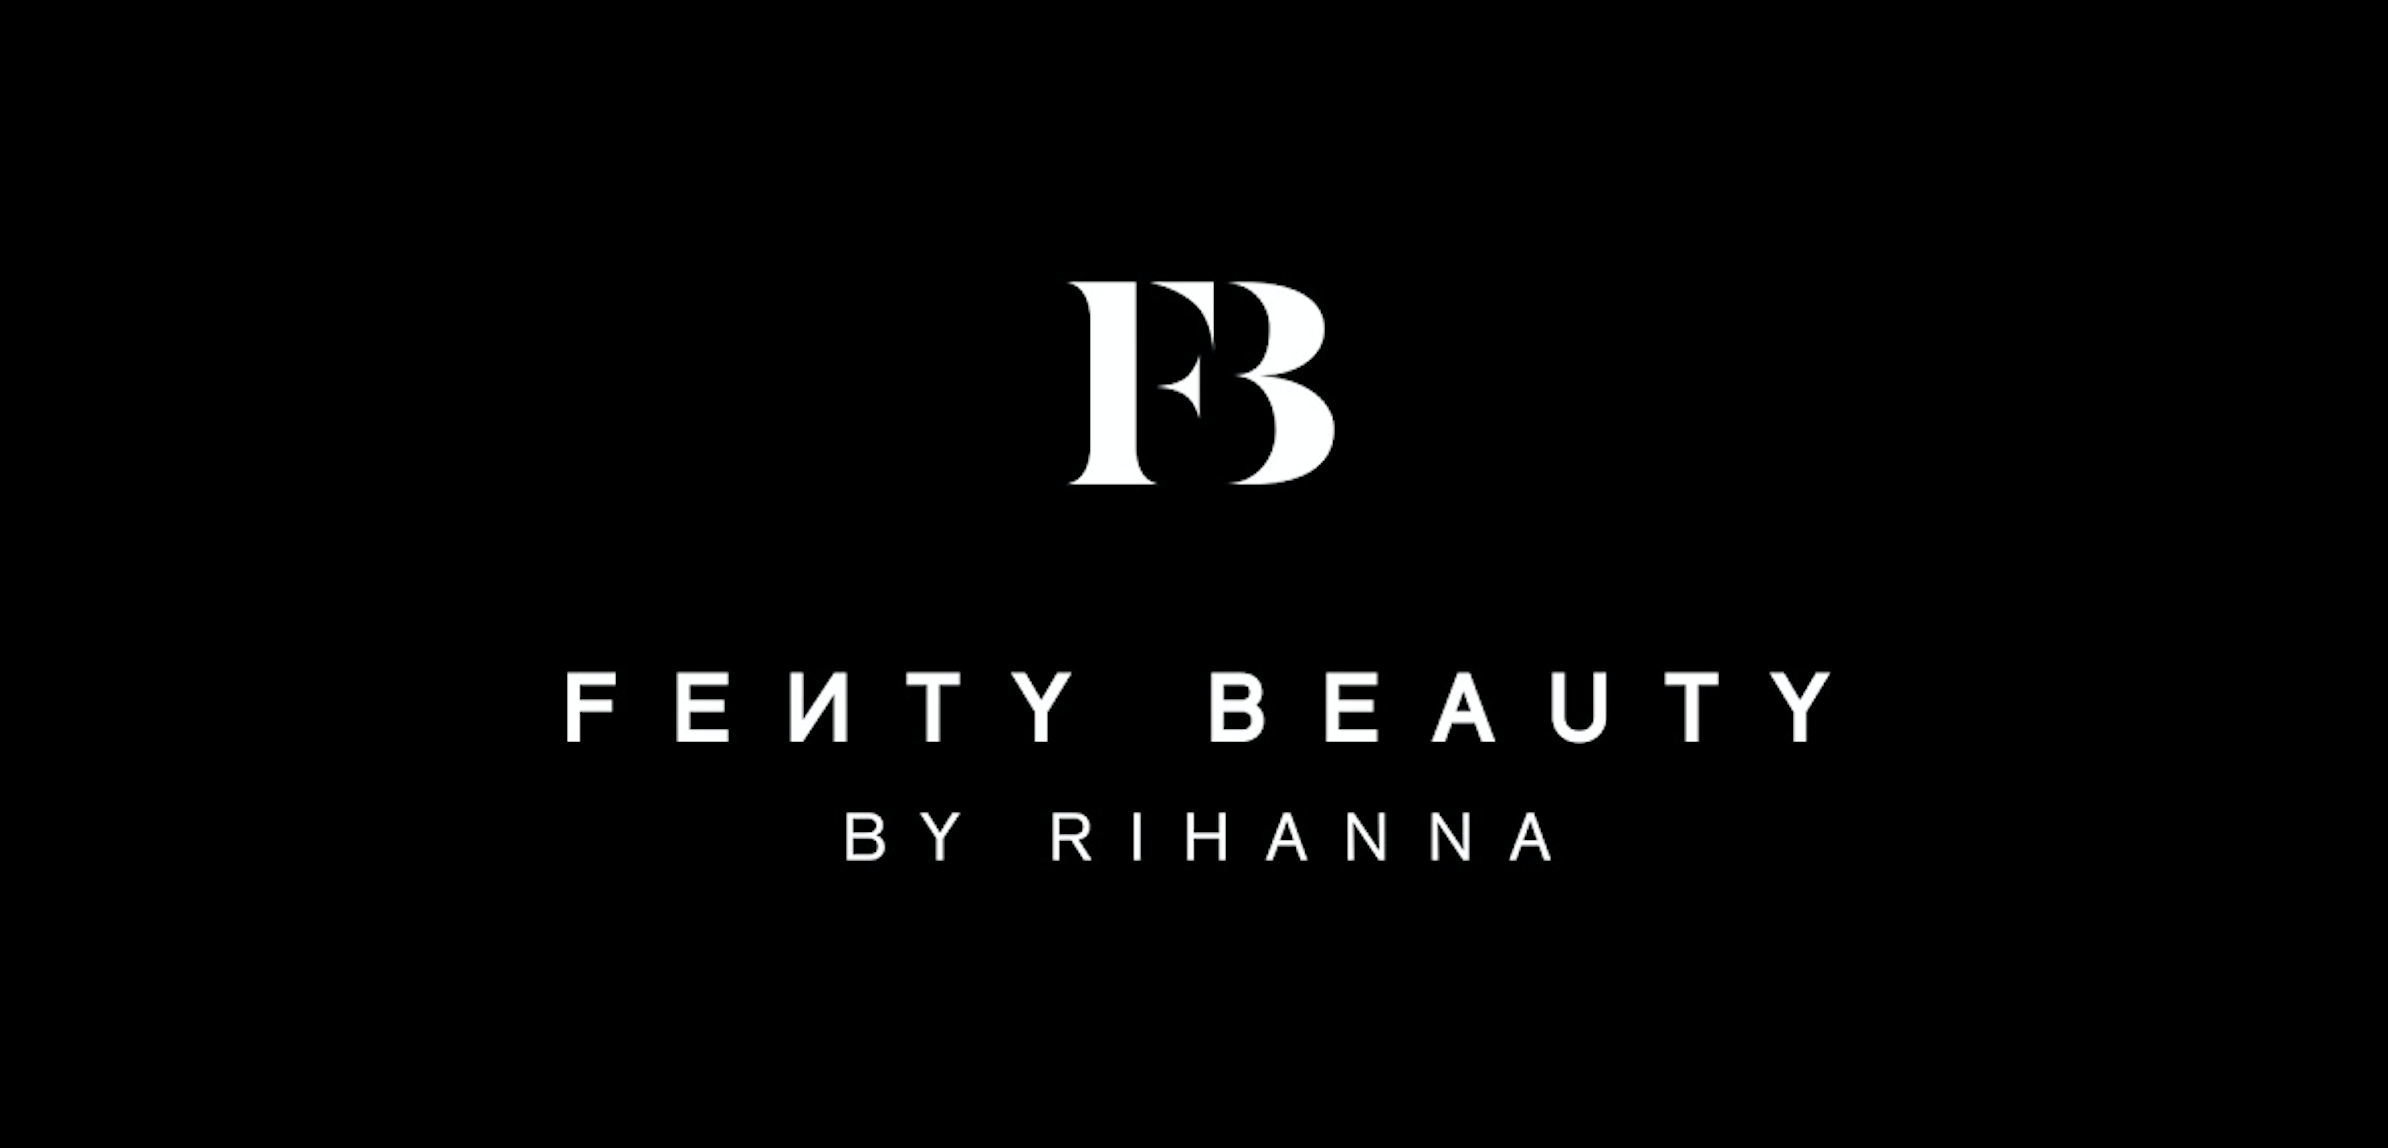 Fenty Beauty by Rihanna - The Global Brand Of Cosmetics.